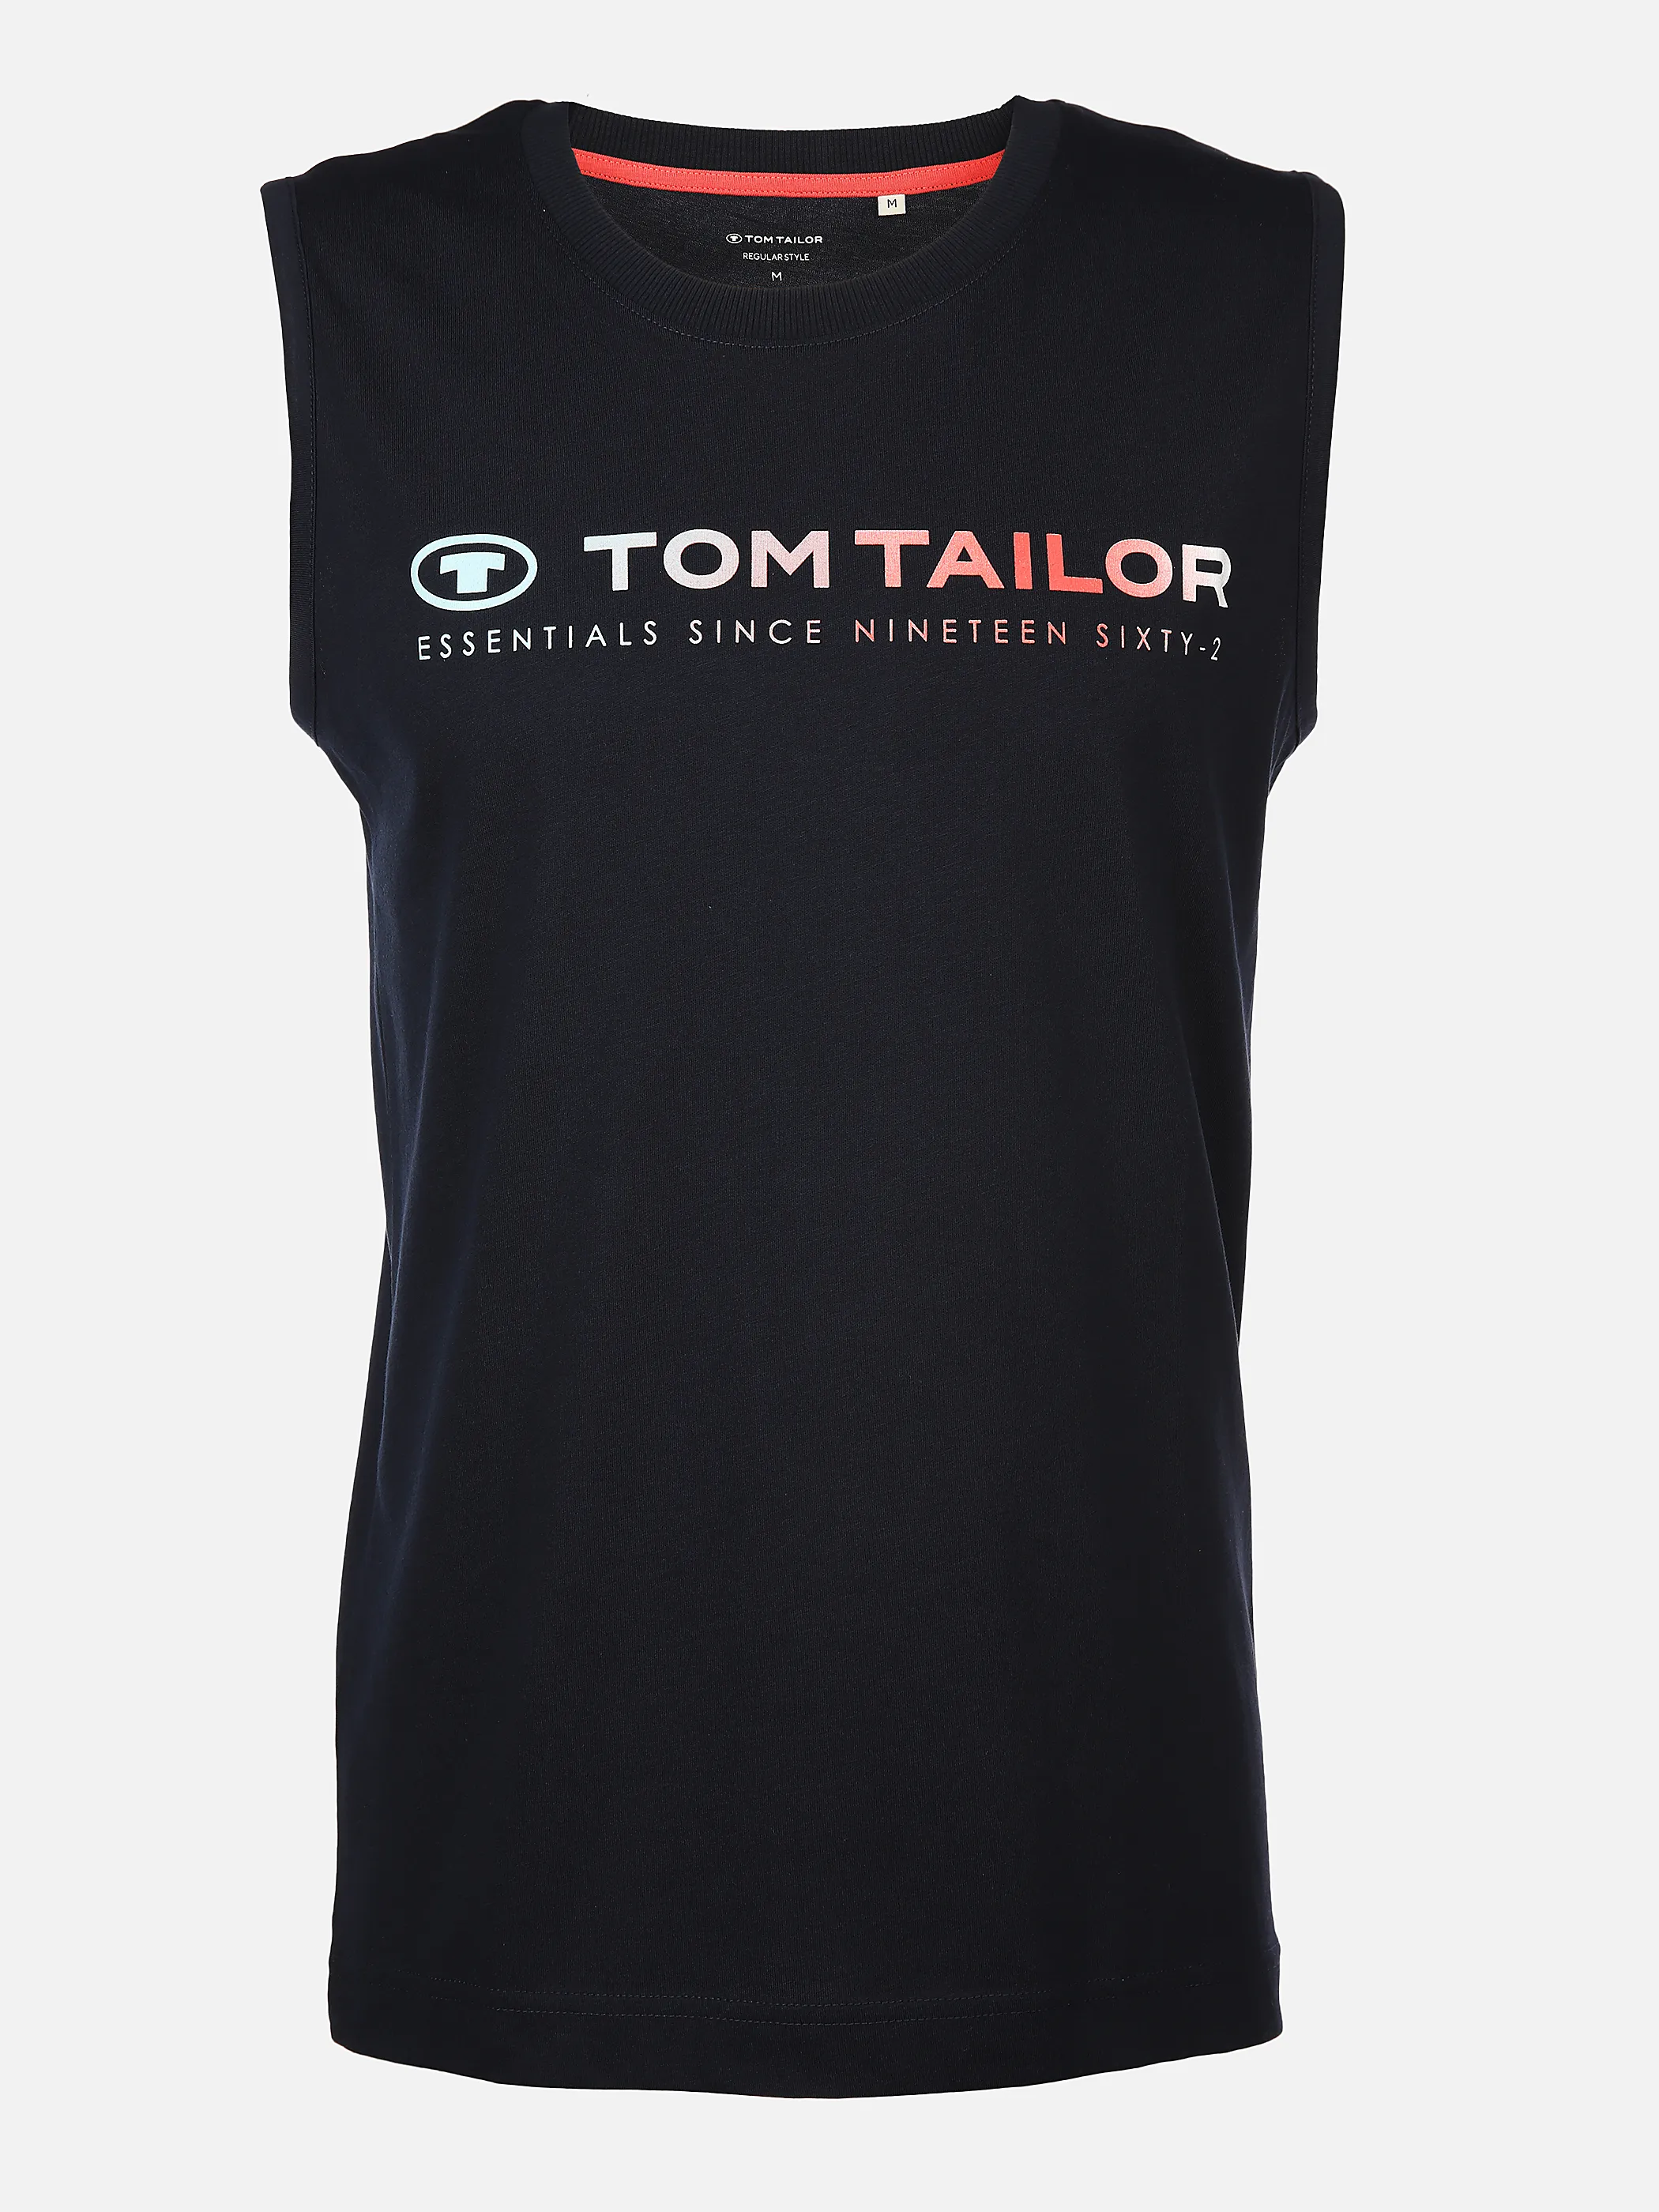 Tom Tailor 1041866 printed tanktop Blau 895643 10668 1